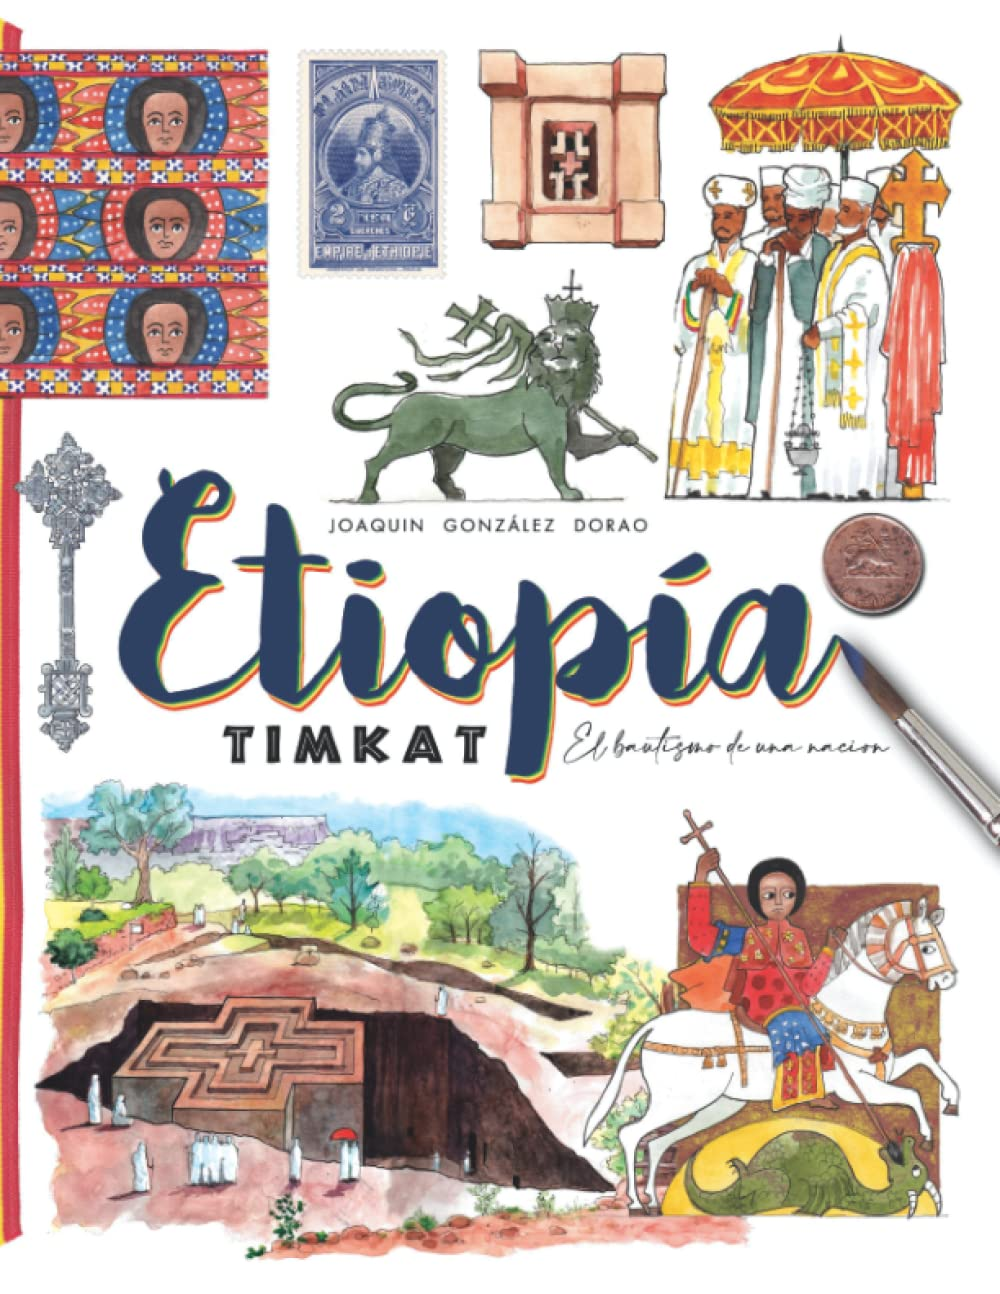 Etiopía Timkat (Spanish Edition)